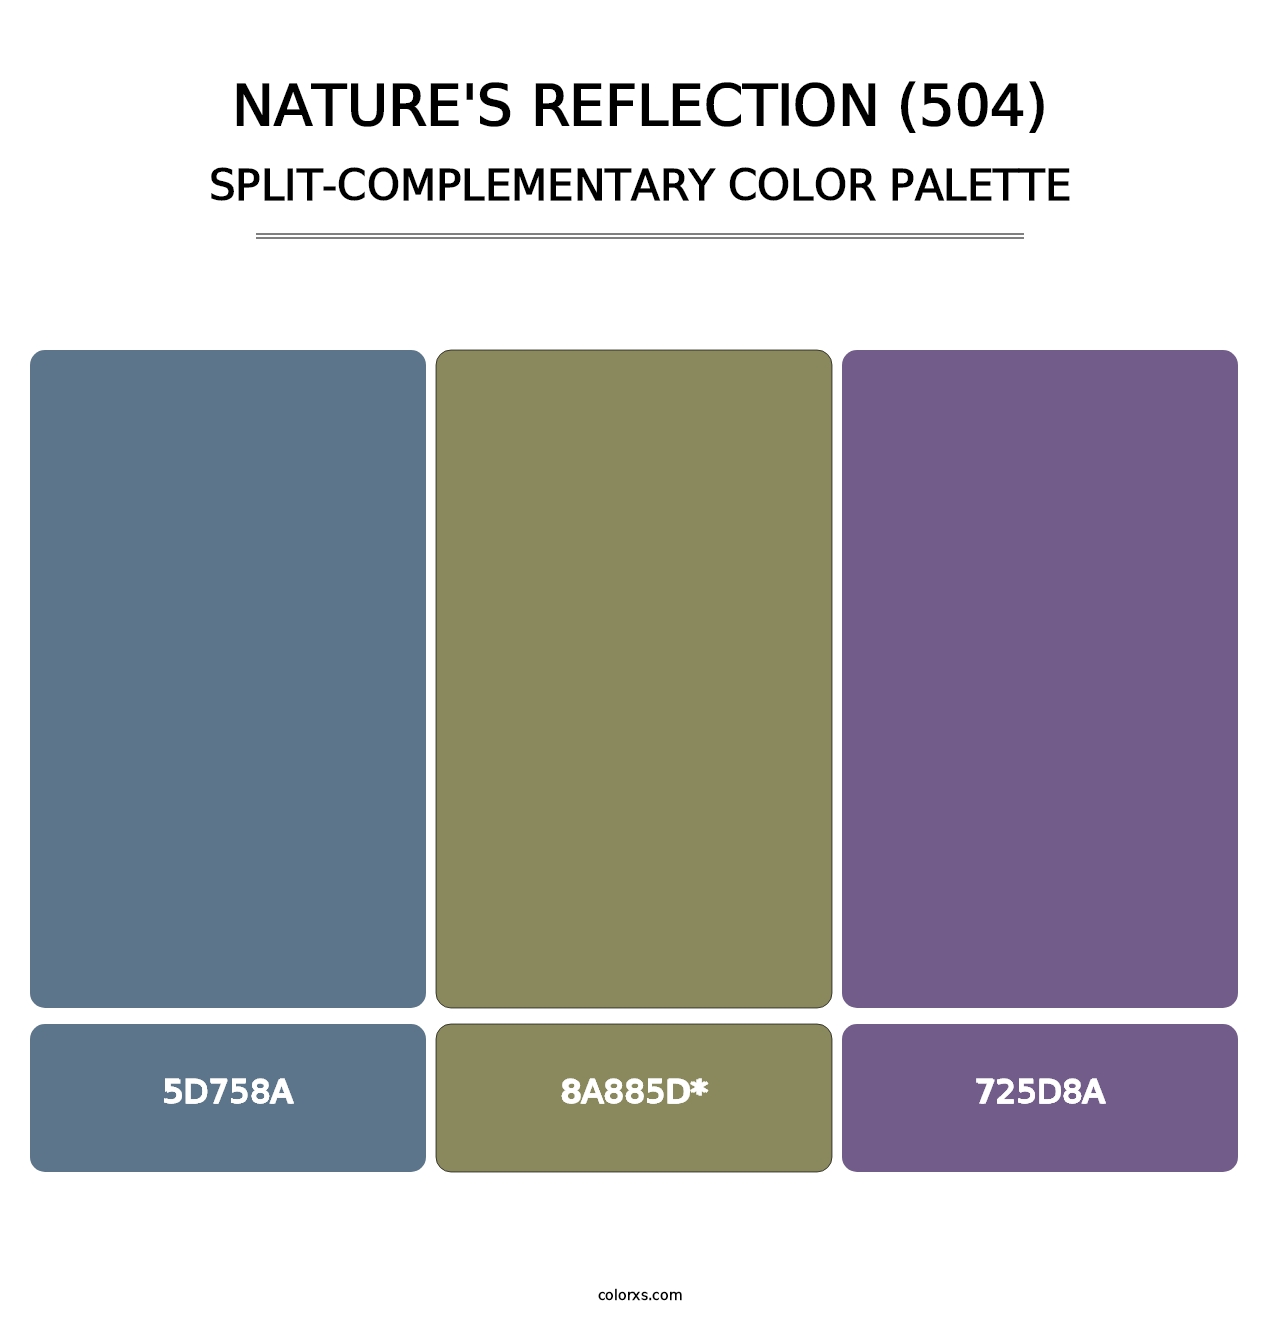 Nature's Reflection (504) - Split-Complementary Color Palette